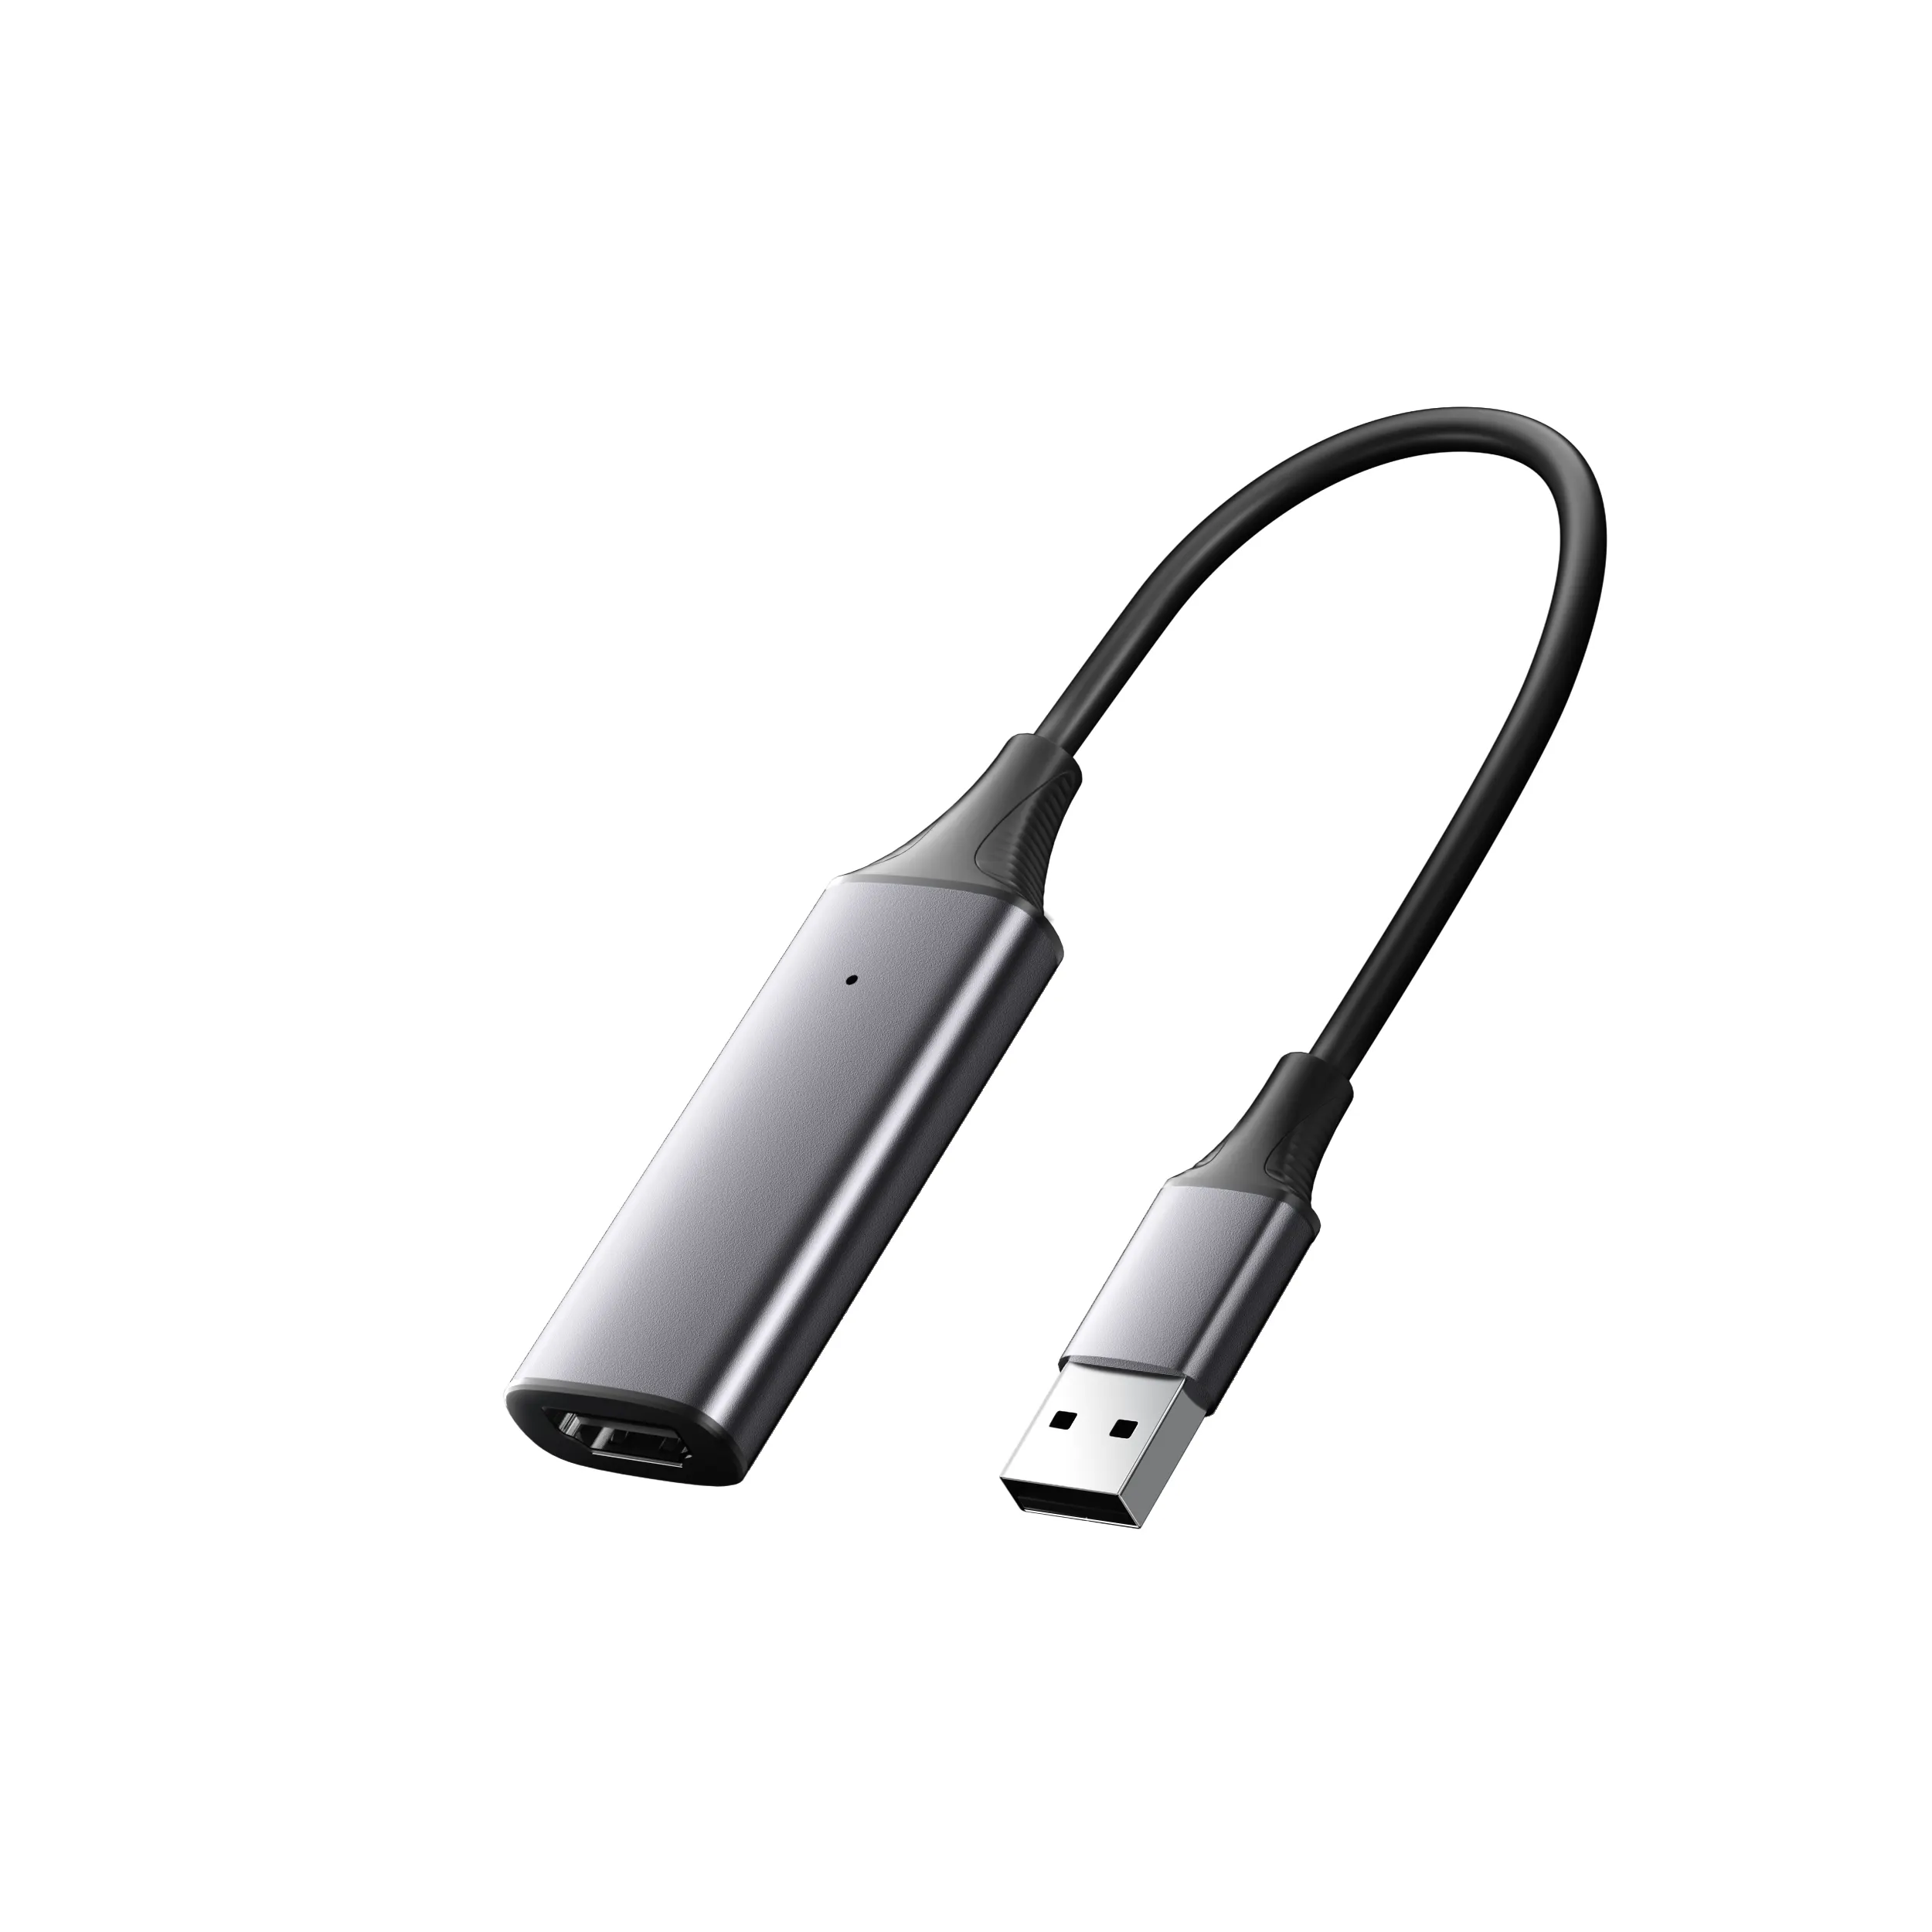 Sıcak satış 4K 1080p canlı Streaming hdmi USB 3.0 2.0 Video yakalama kartı Xbox PS4 PS3 wii u anahtarı